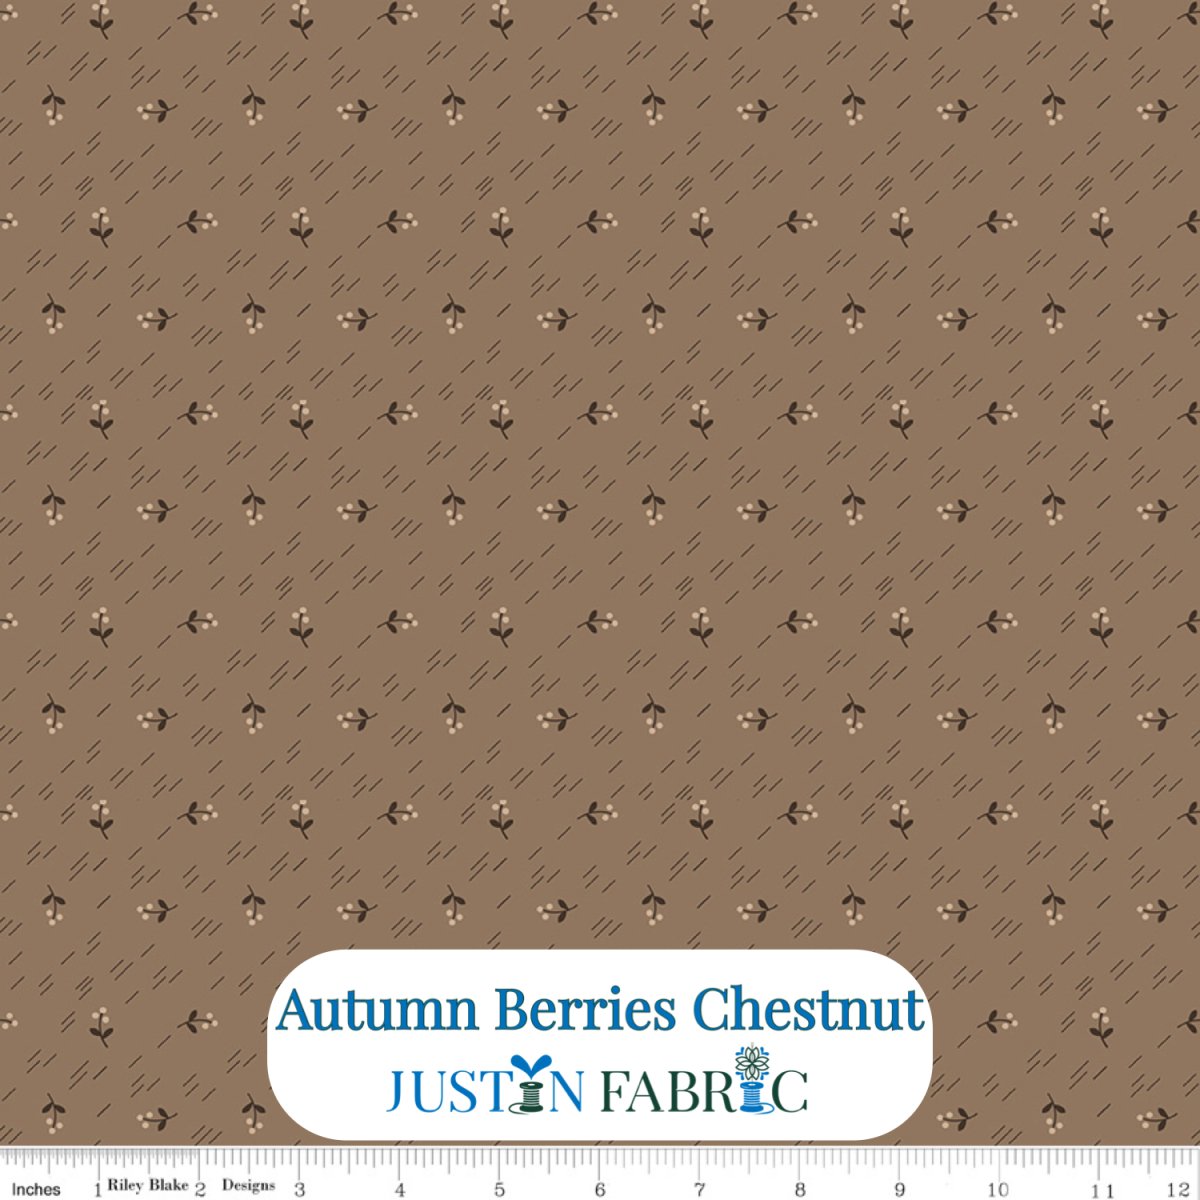 Autumn Berries Chestnut Cotton Yardage by Lori Holt | Riley Blake Designs -C14652-CHESTNUT - Justin Fabric!